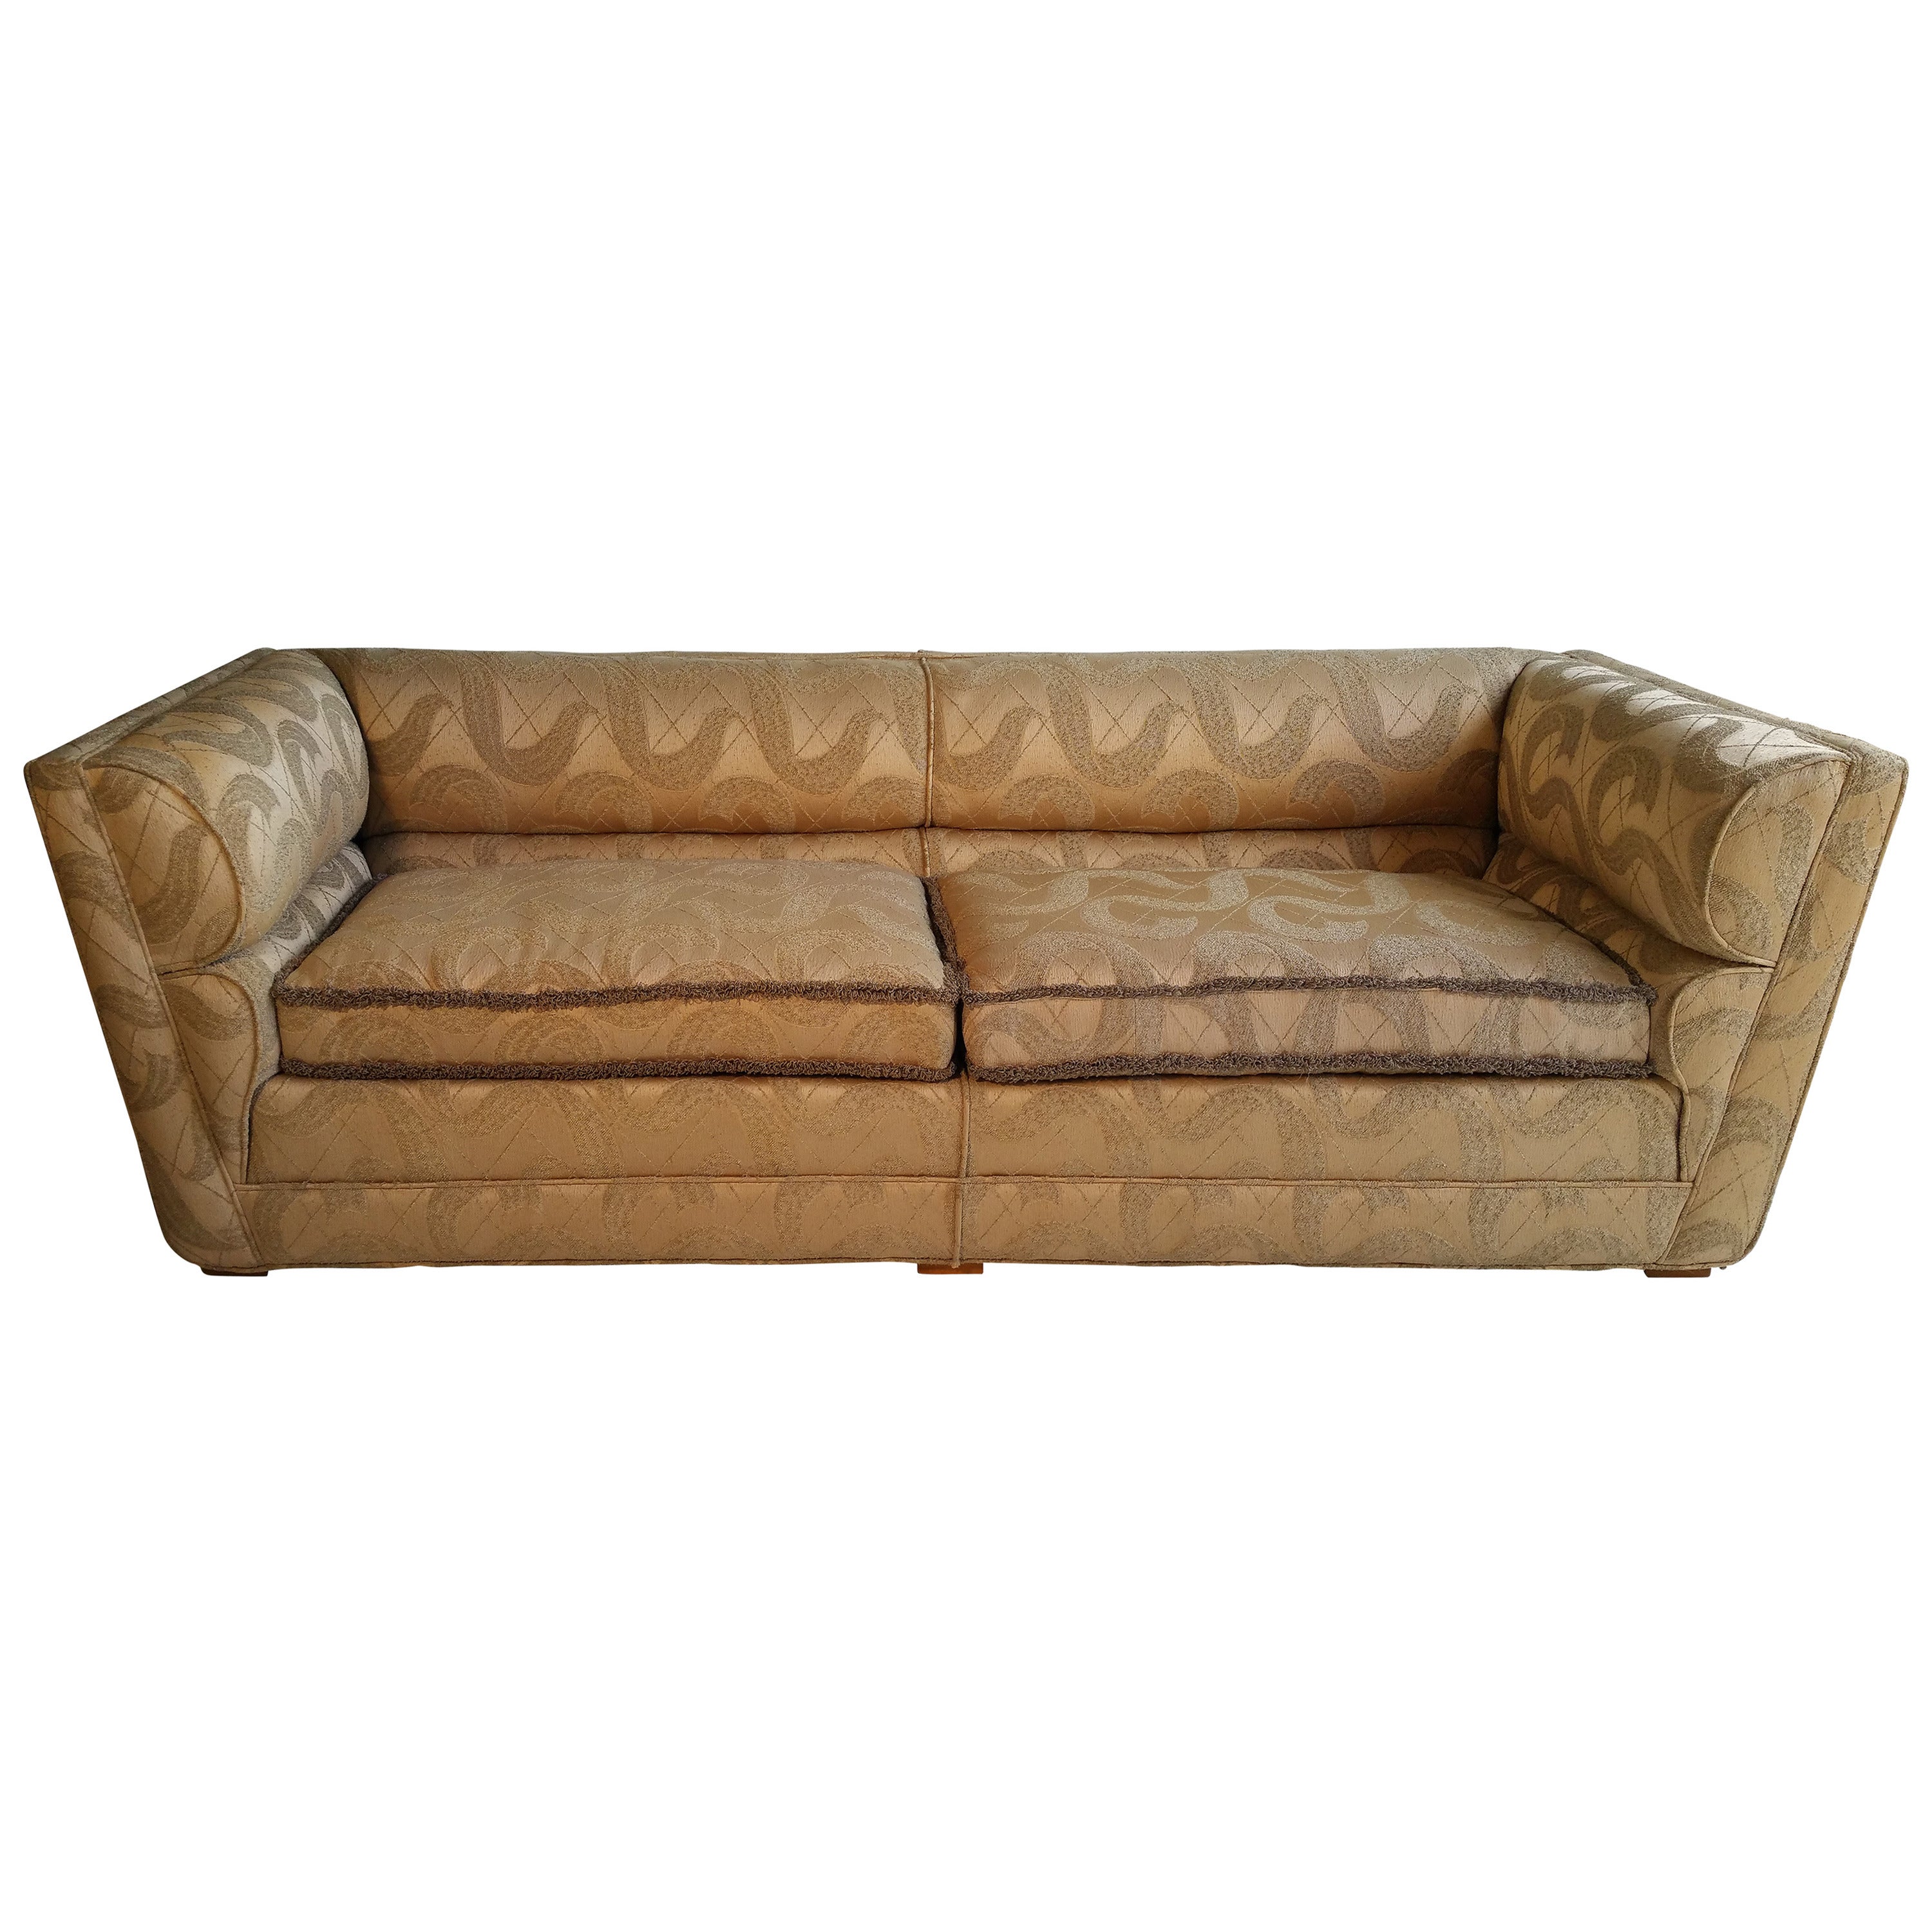 Outstanding Art Deco Sofa Original Sculpted Brocade Fabric For Sale